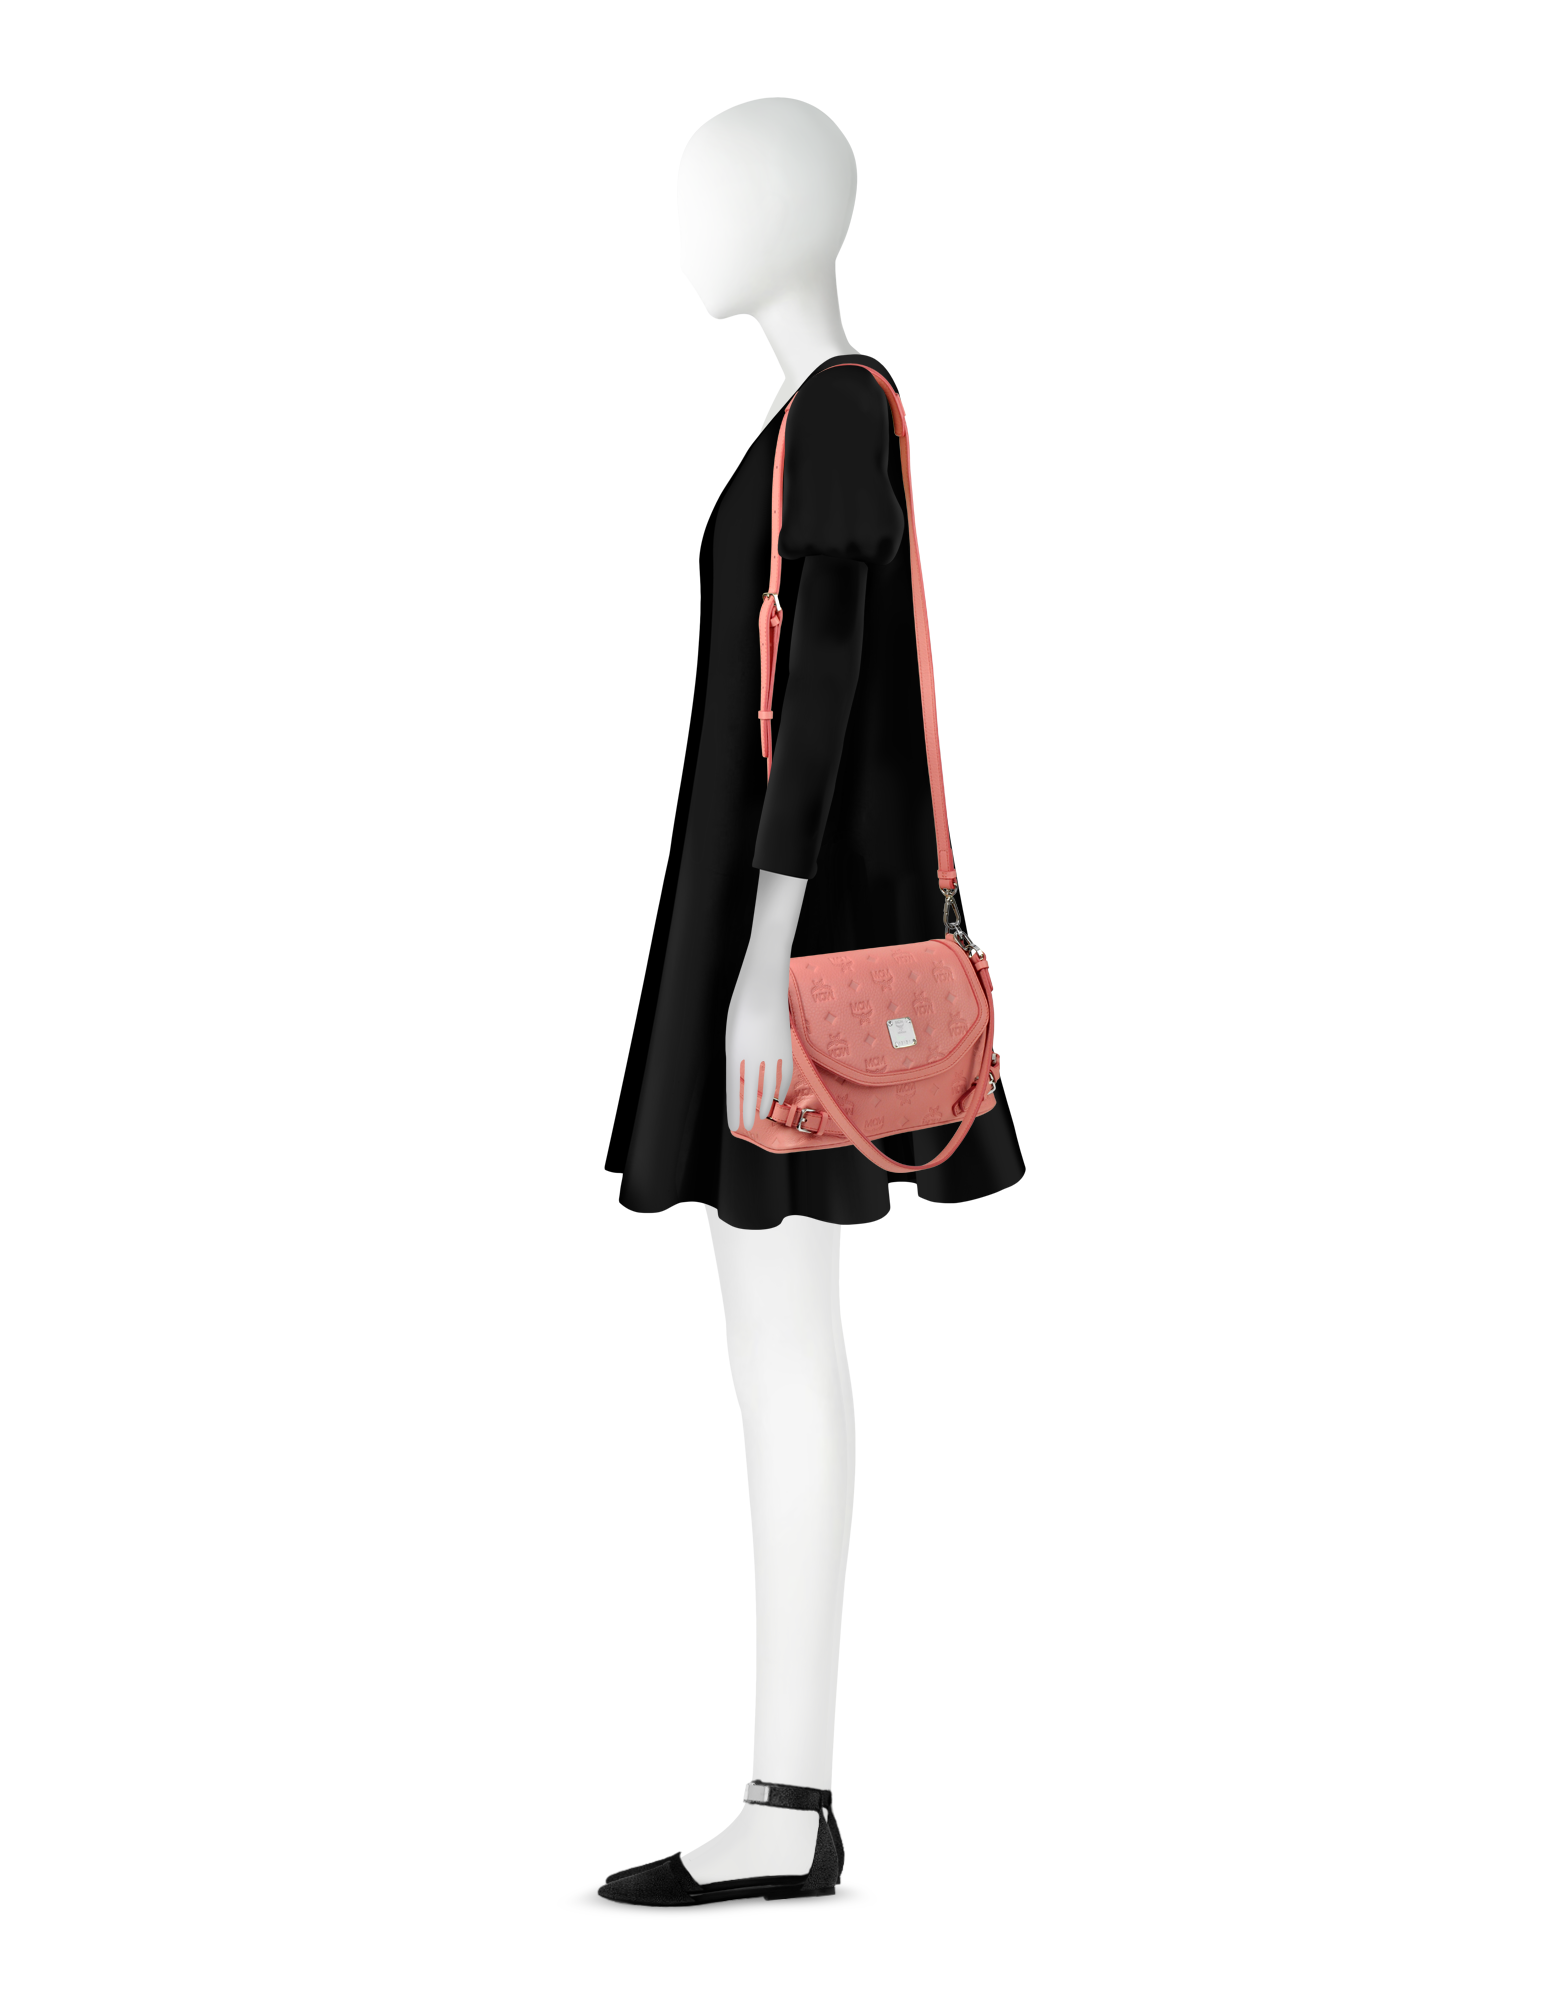 MCM Millie Monogrammed Pink Leather Cross Body Bag - MyDesignerly